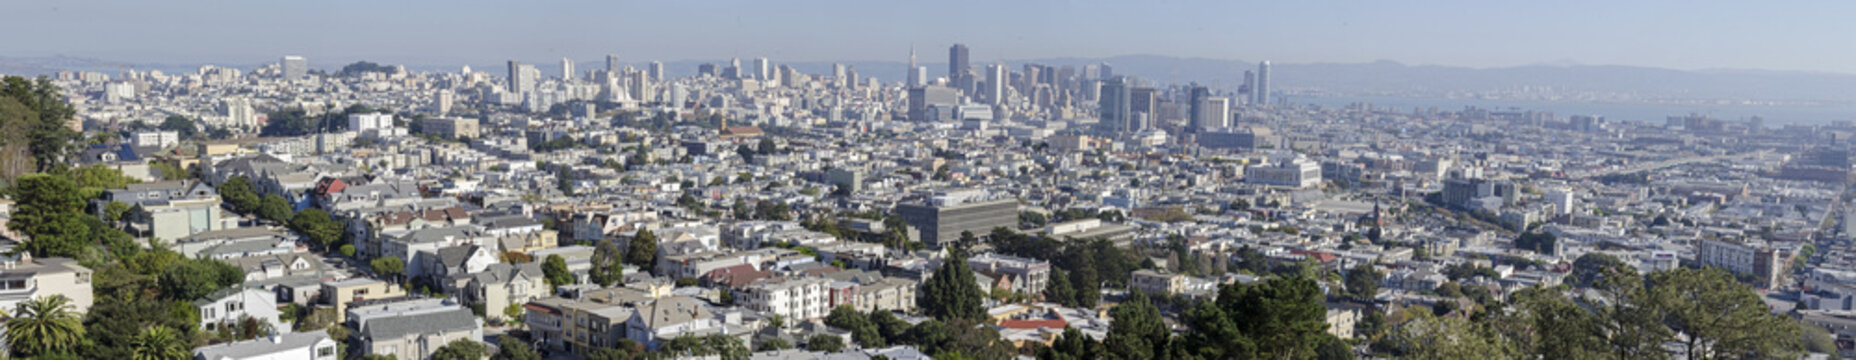 San Francisco - Skyline